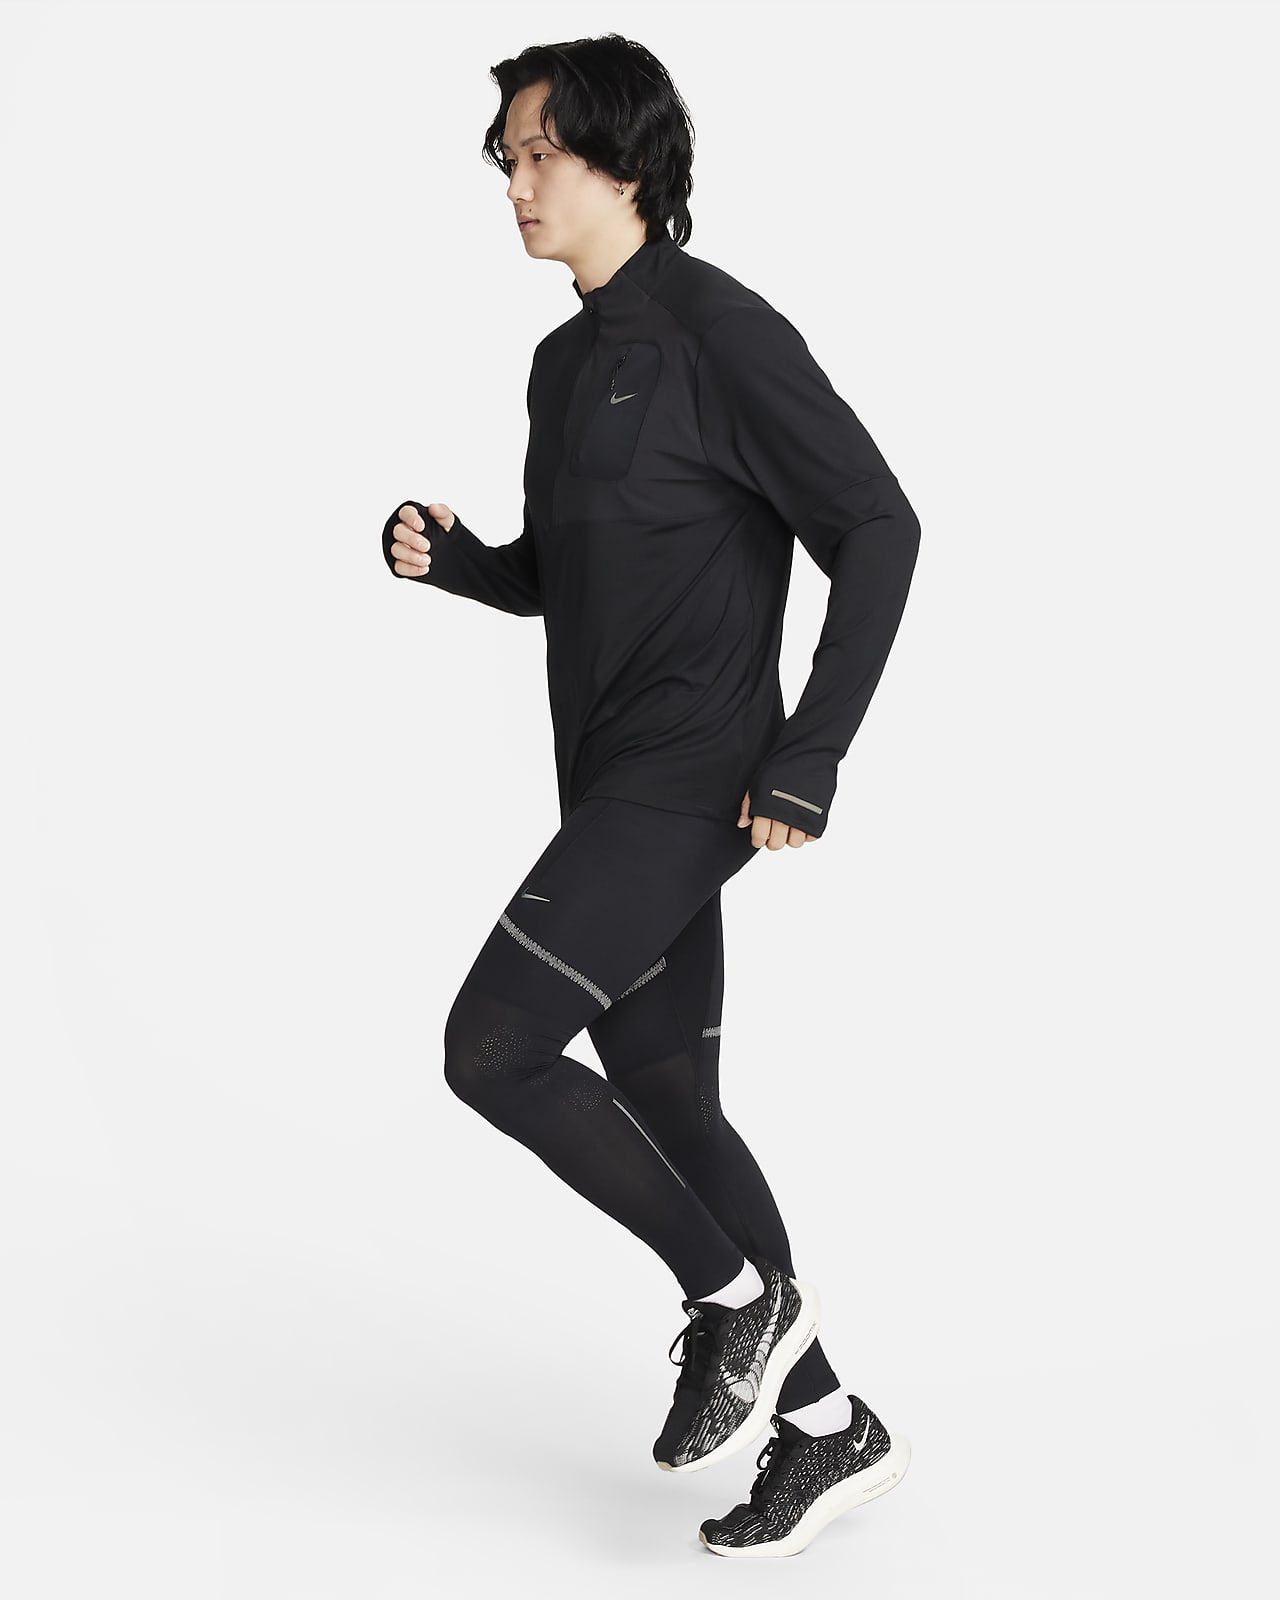 Nike Tech Men's Running Tights. Nike SG